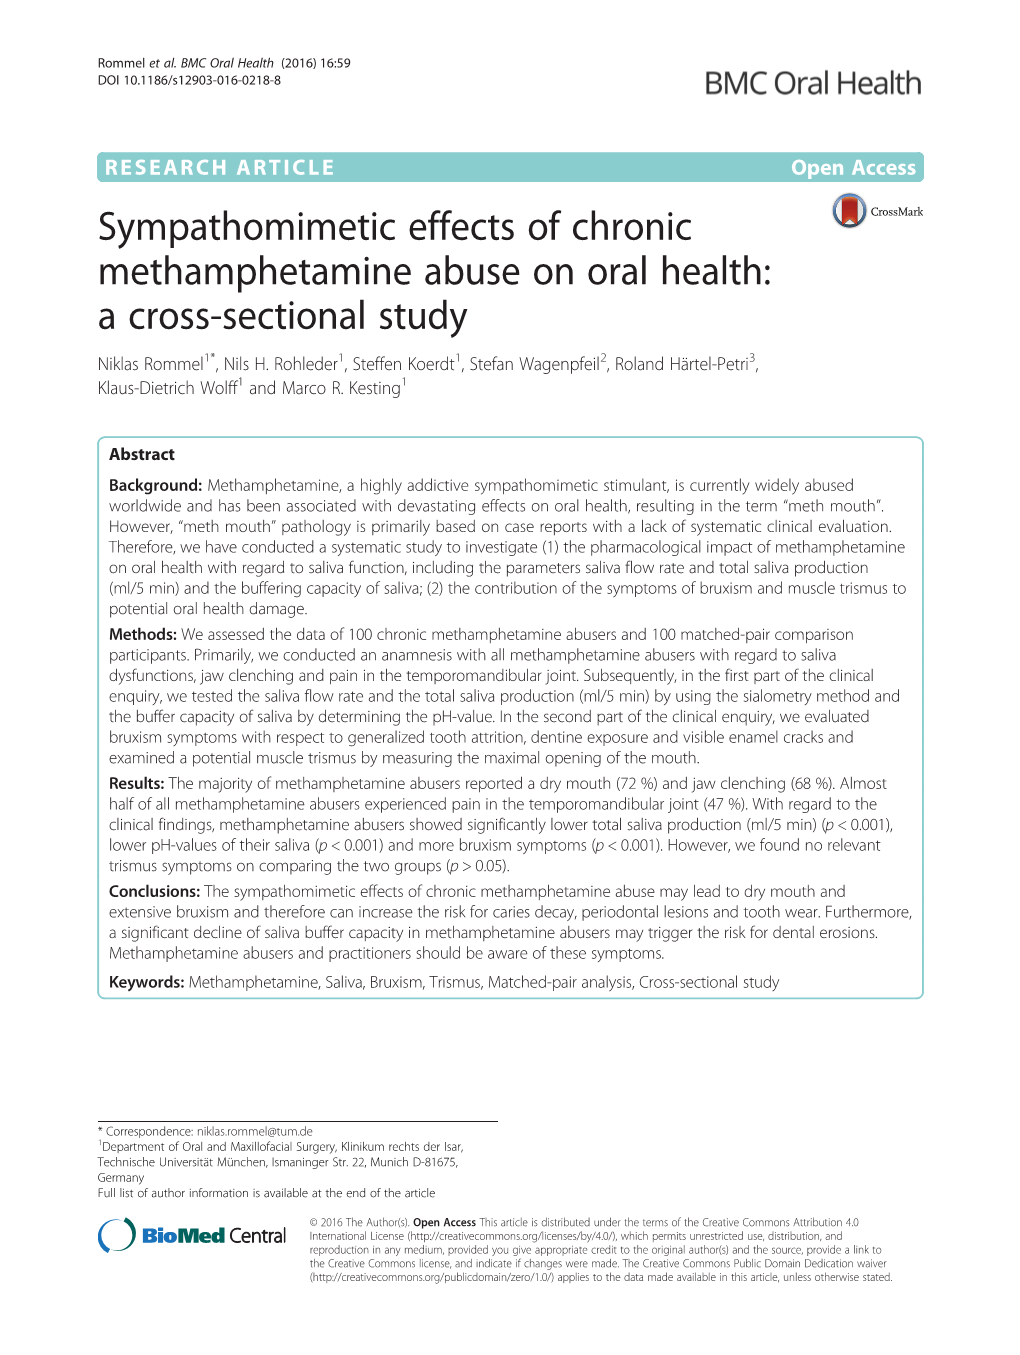 Sympathomimetic Effects of Chronic Methamphetamine Abuse on Oral Health: a Cross-Sectional Study Niklas Rommel1*, Nils H